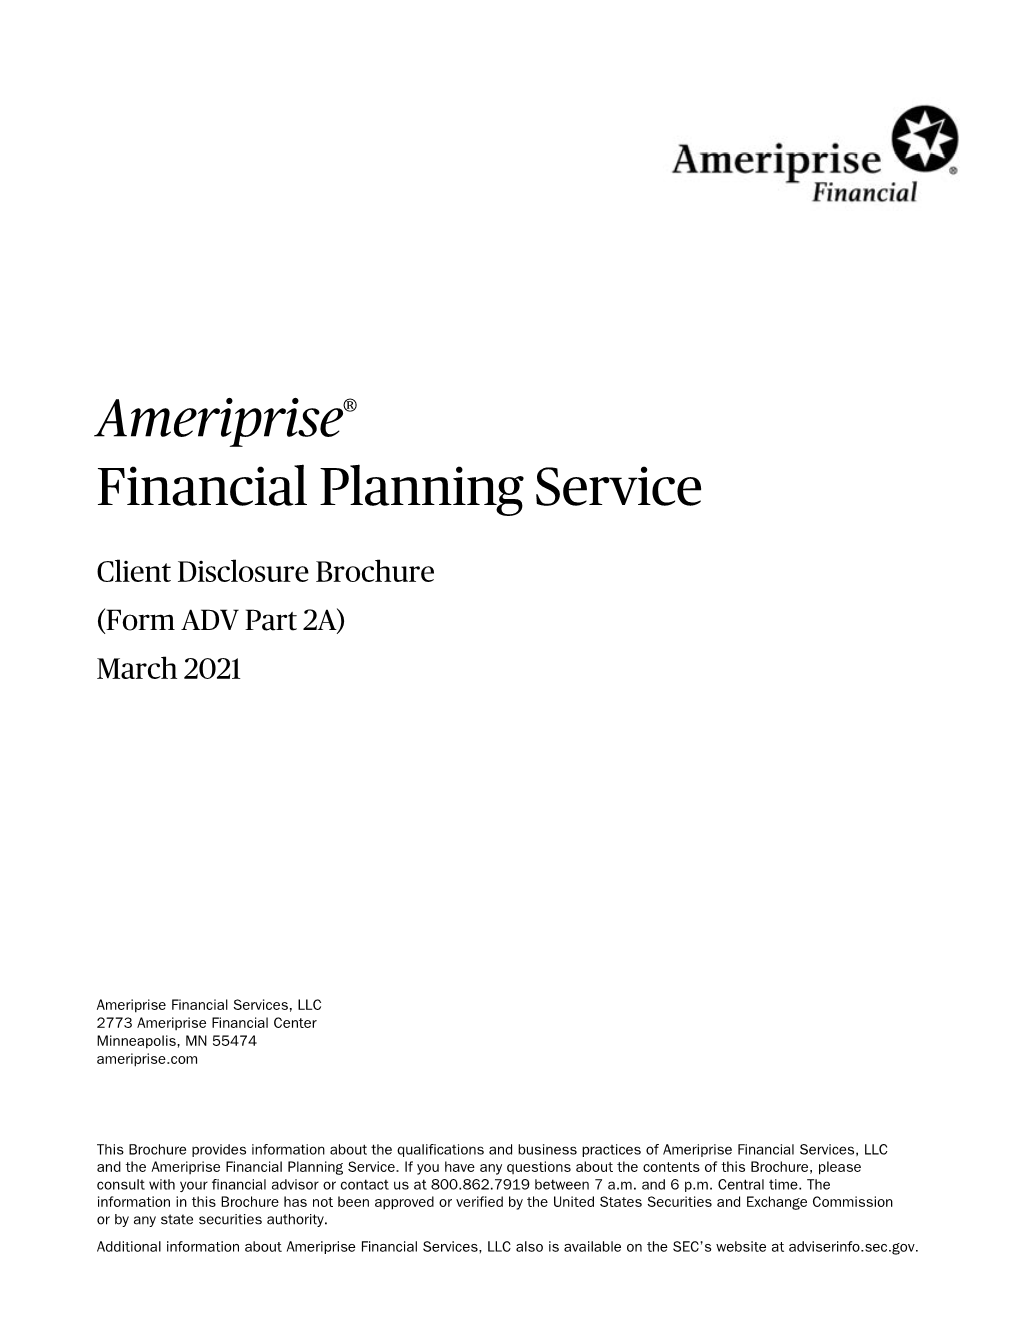 Ameriprise Financial Planning Service Client Disclosure Brochure